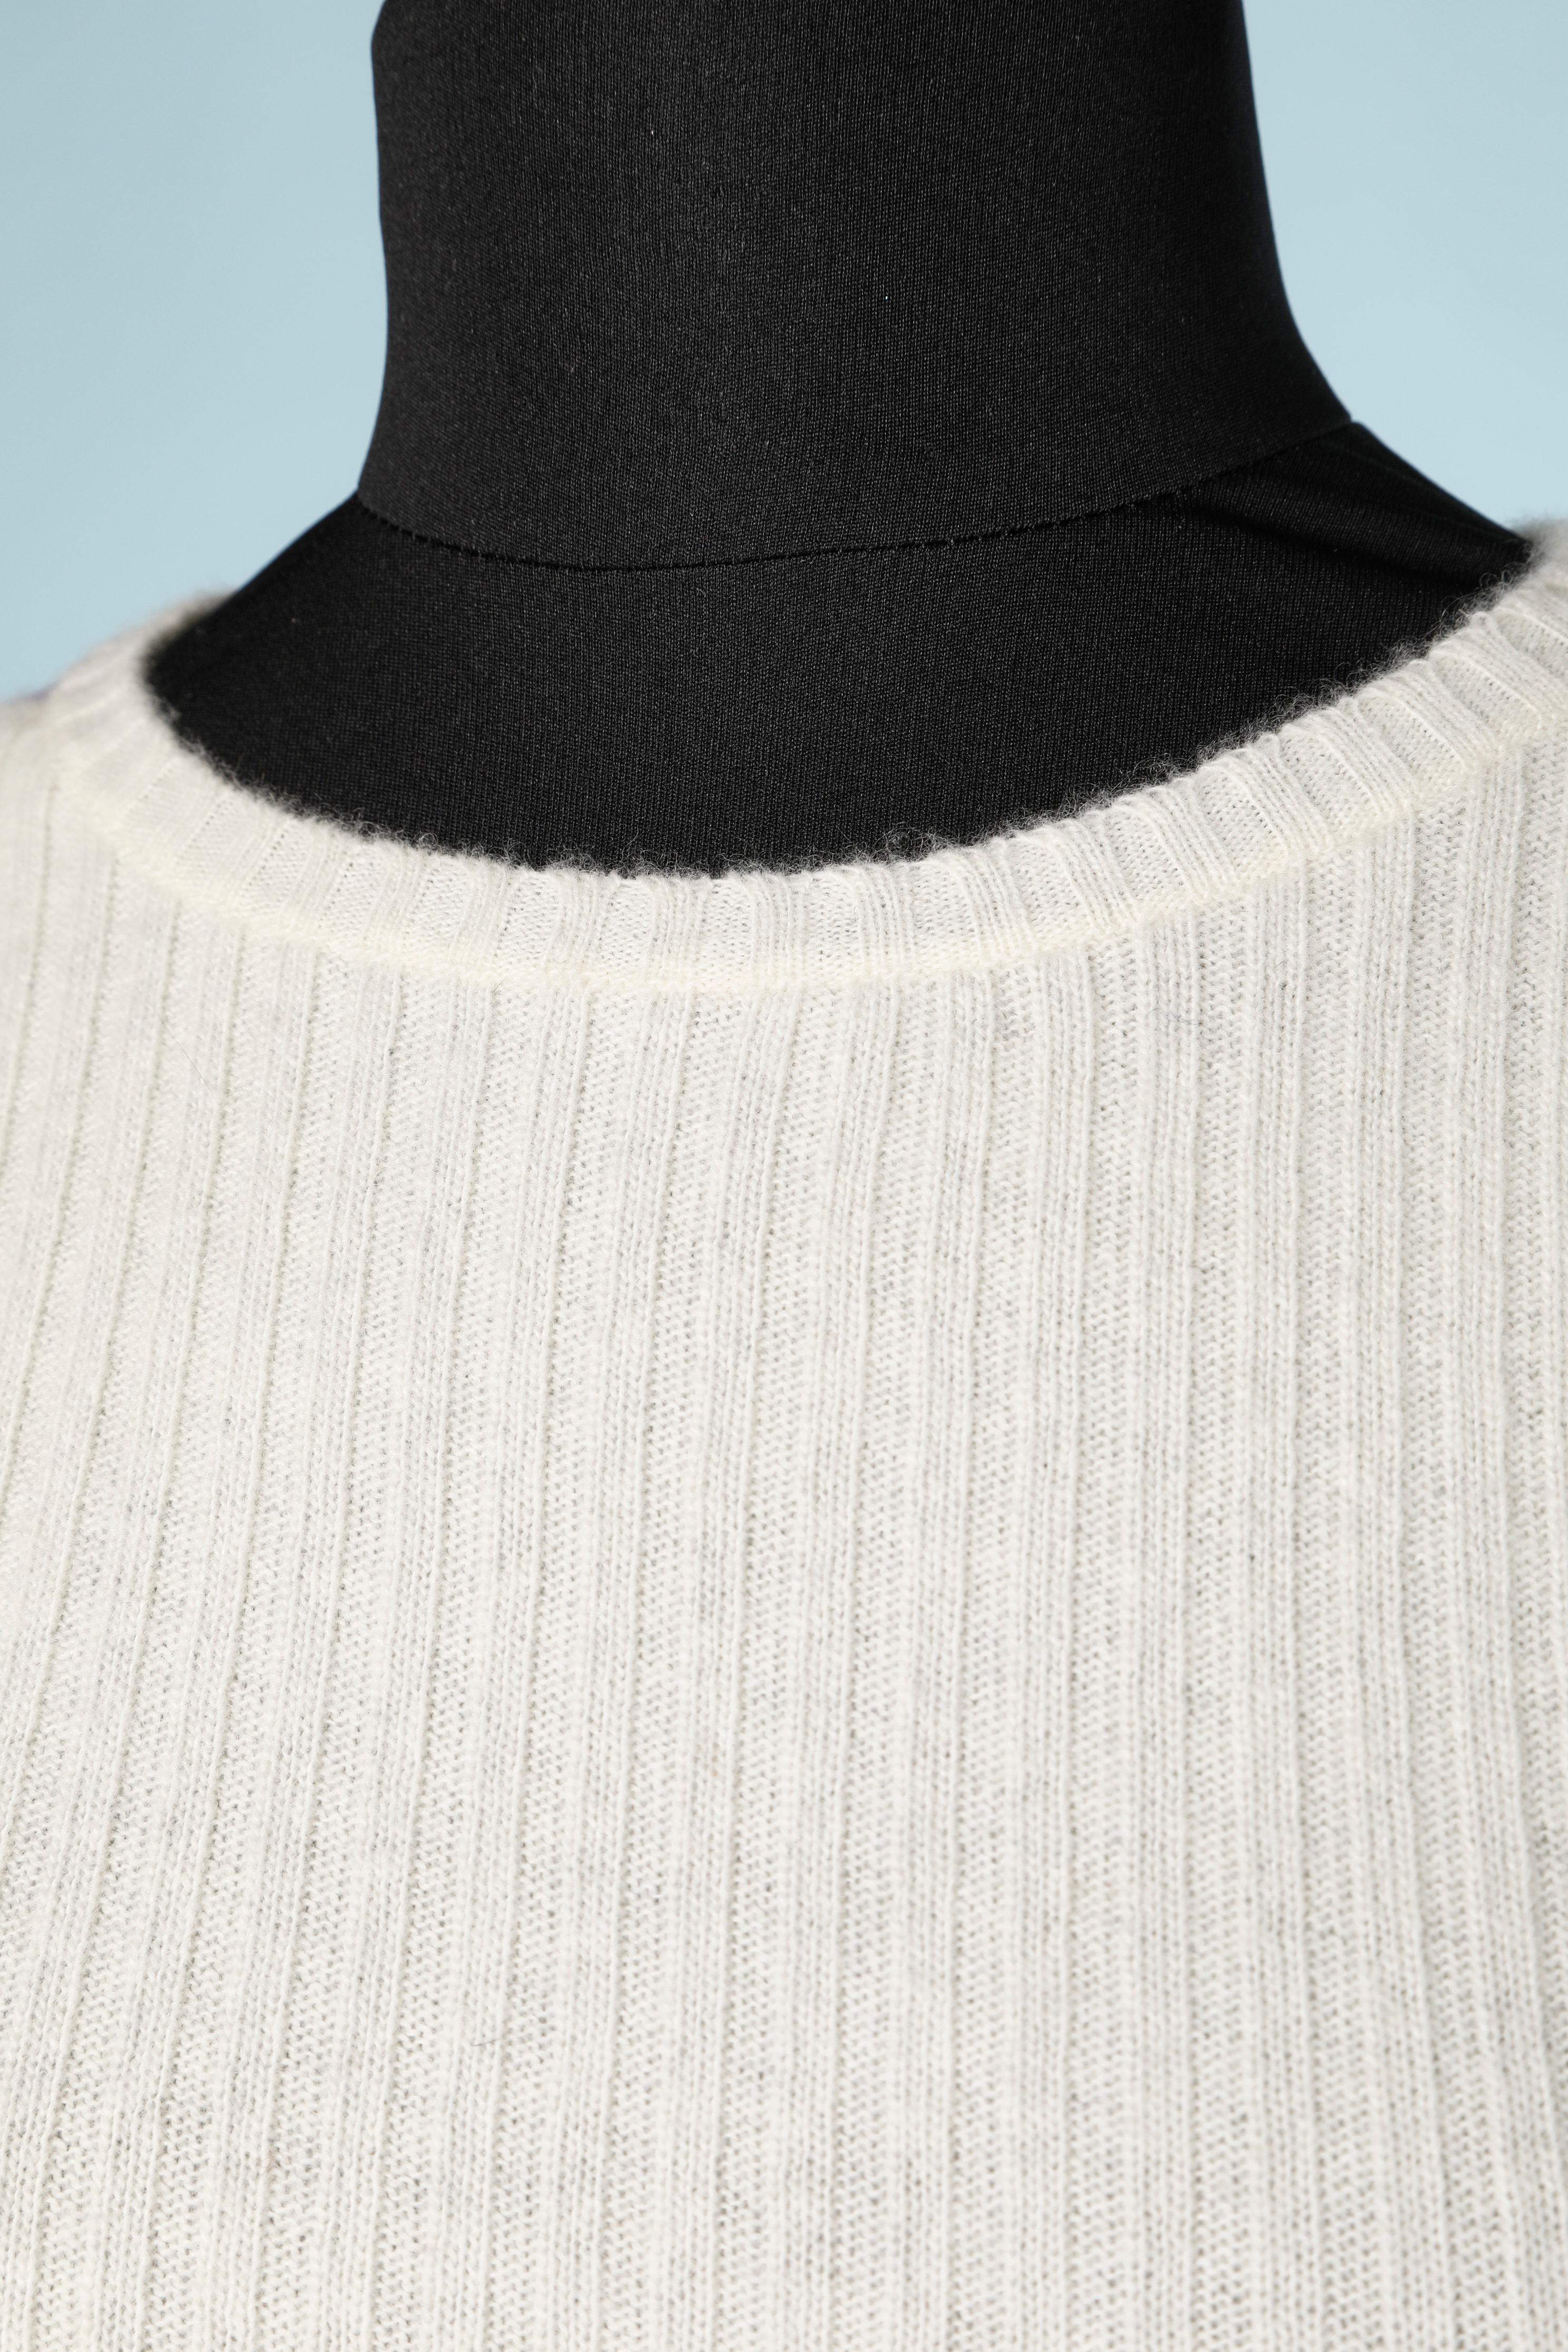 lavender cashmere sweaters